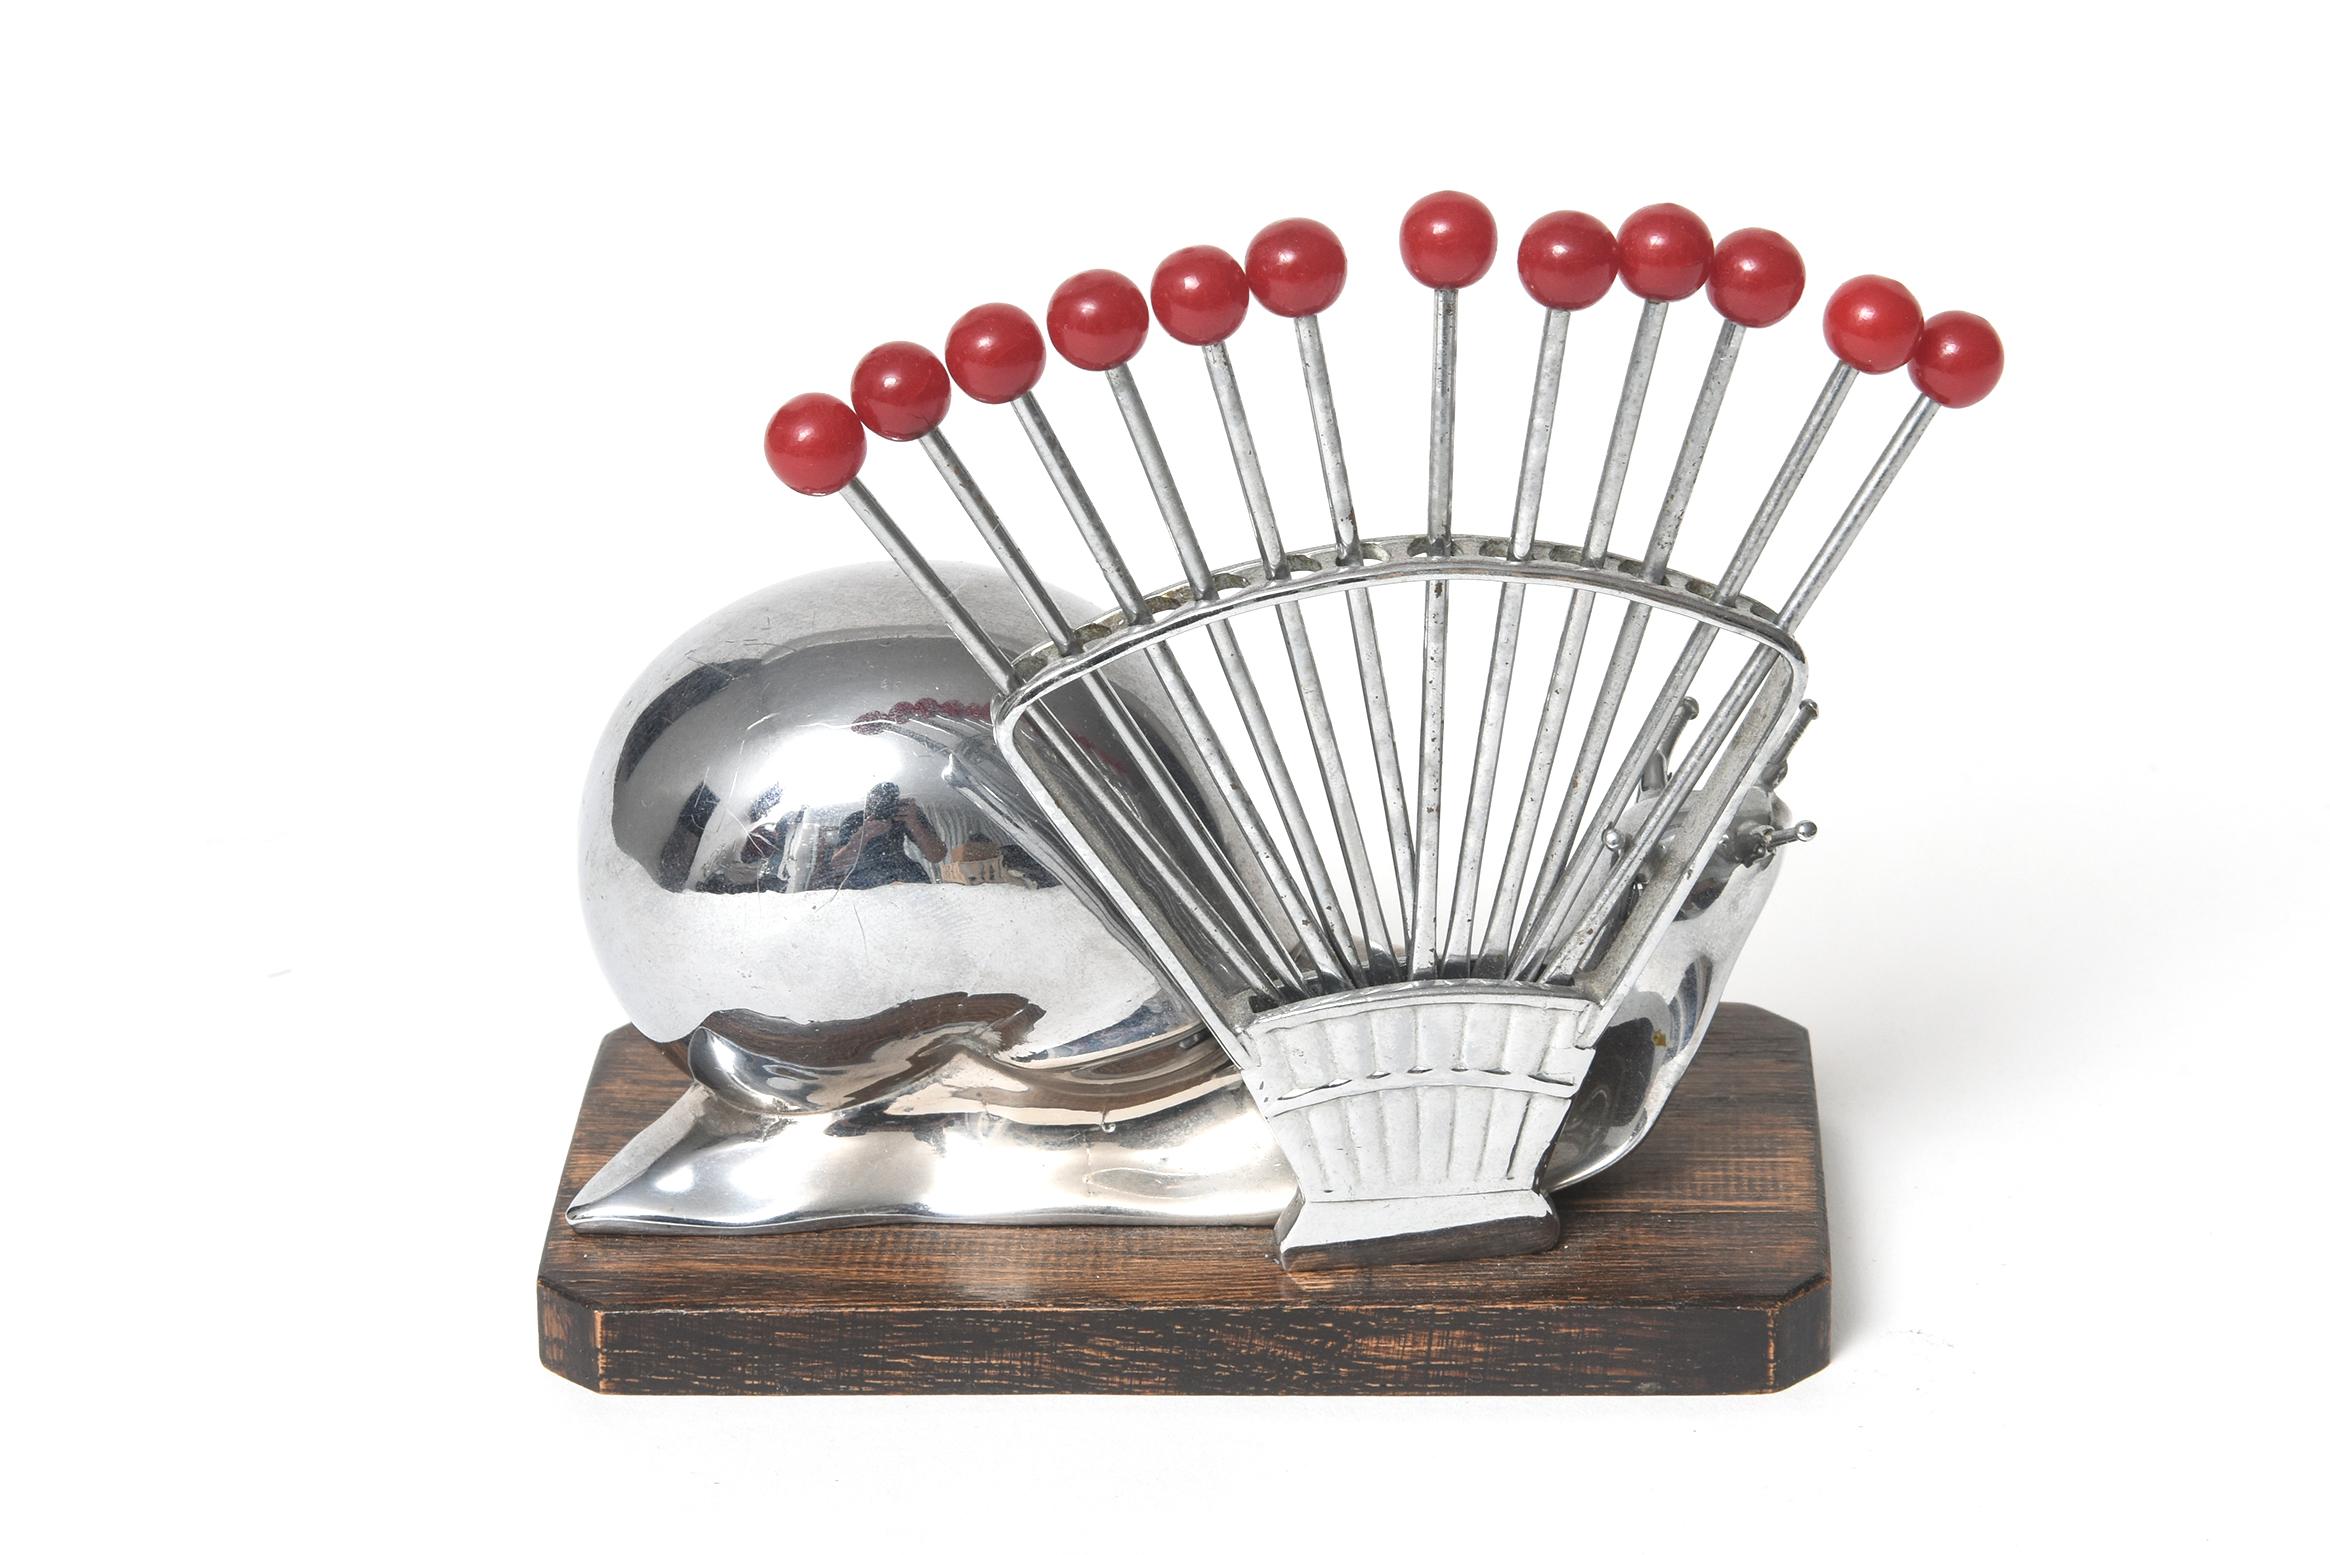 Mid-20th Century French Art Deco Chrome Snail Cocktail Pick Horderves Set with Bakelite Forks